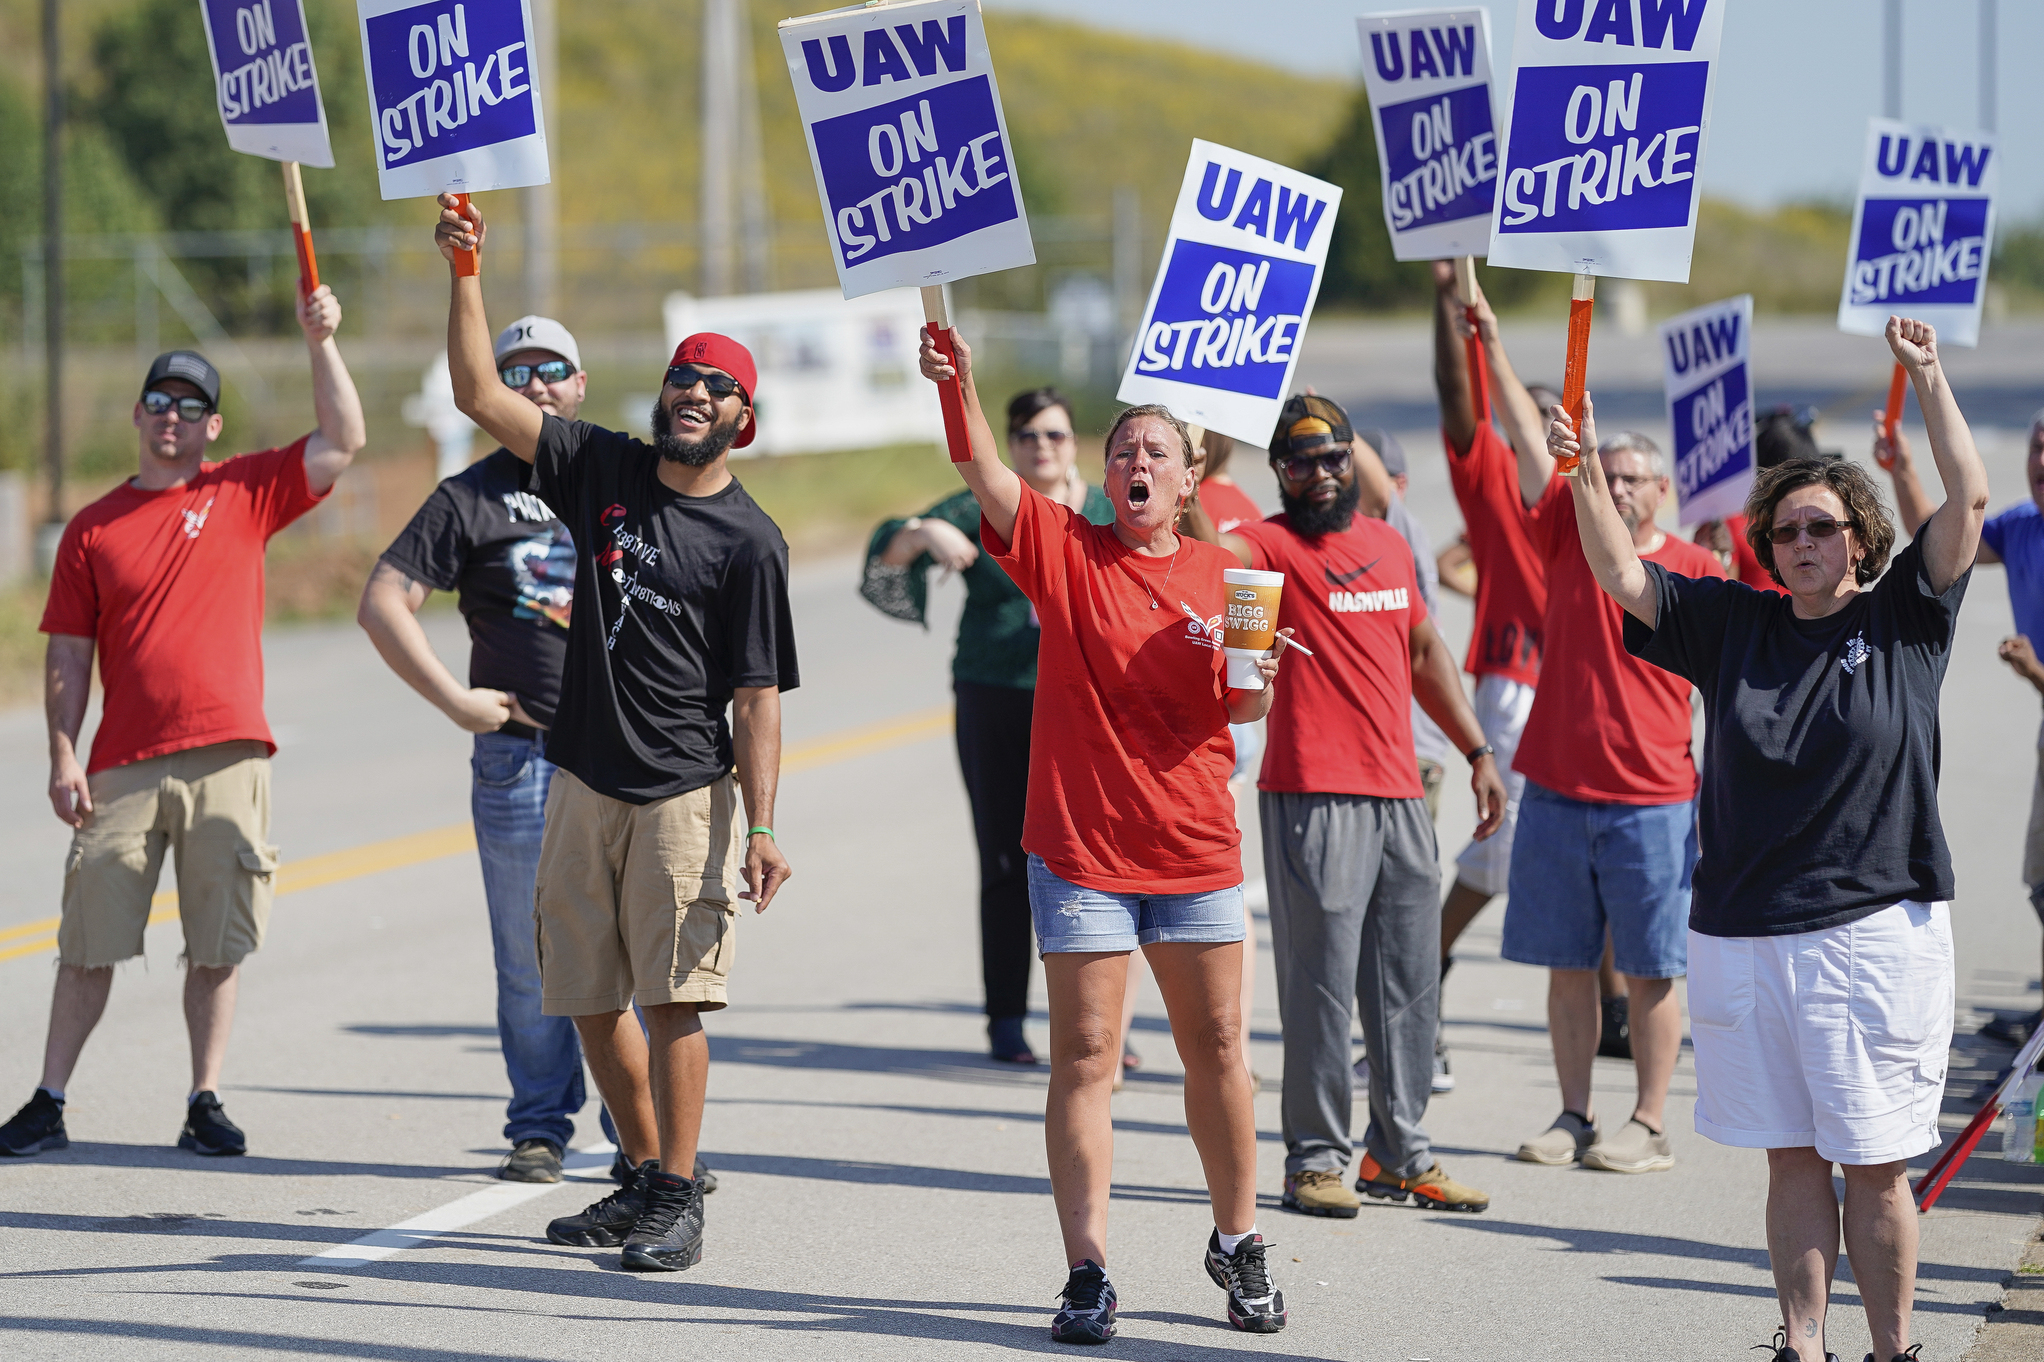 Striking workers outside a General Motors plant